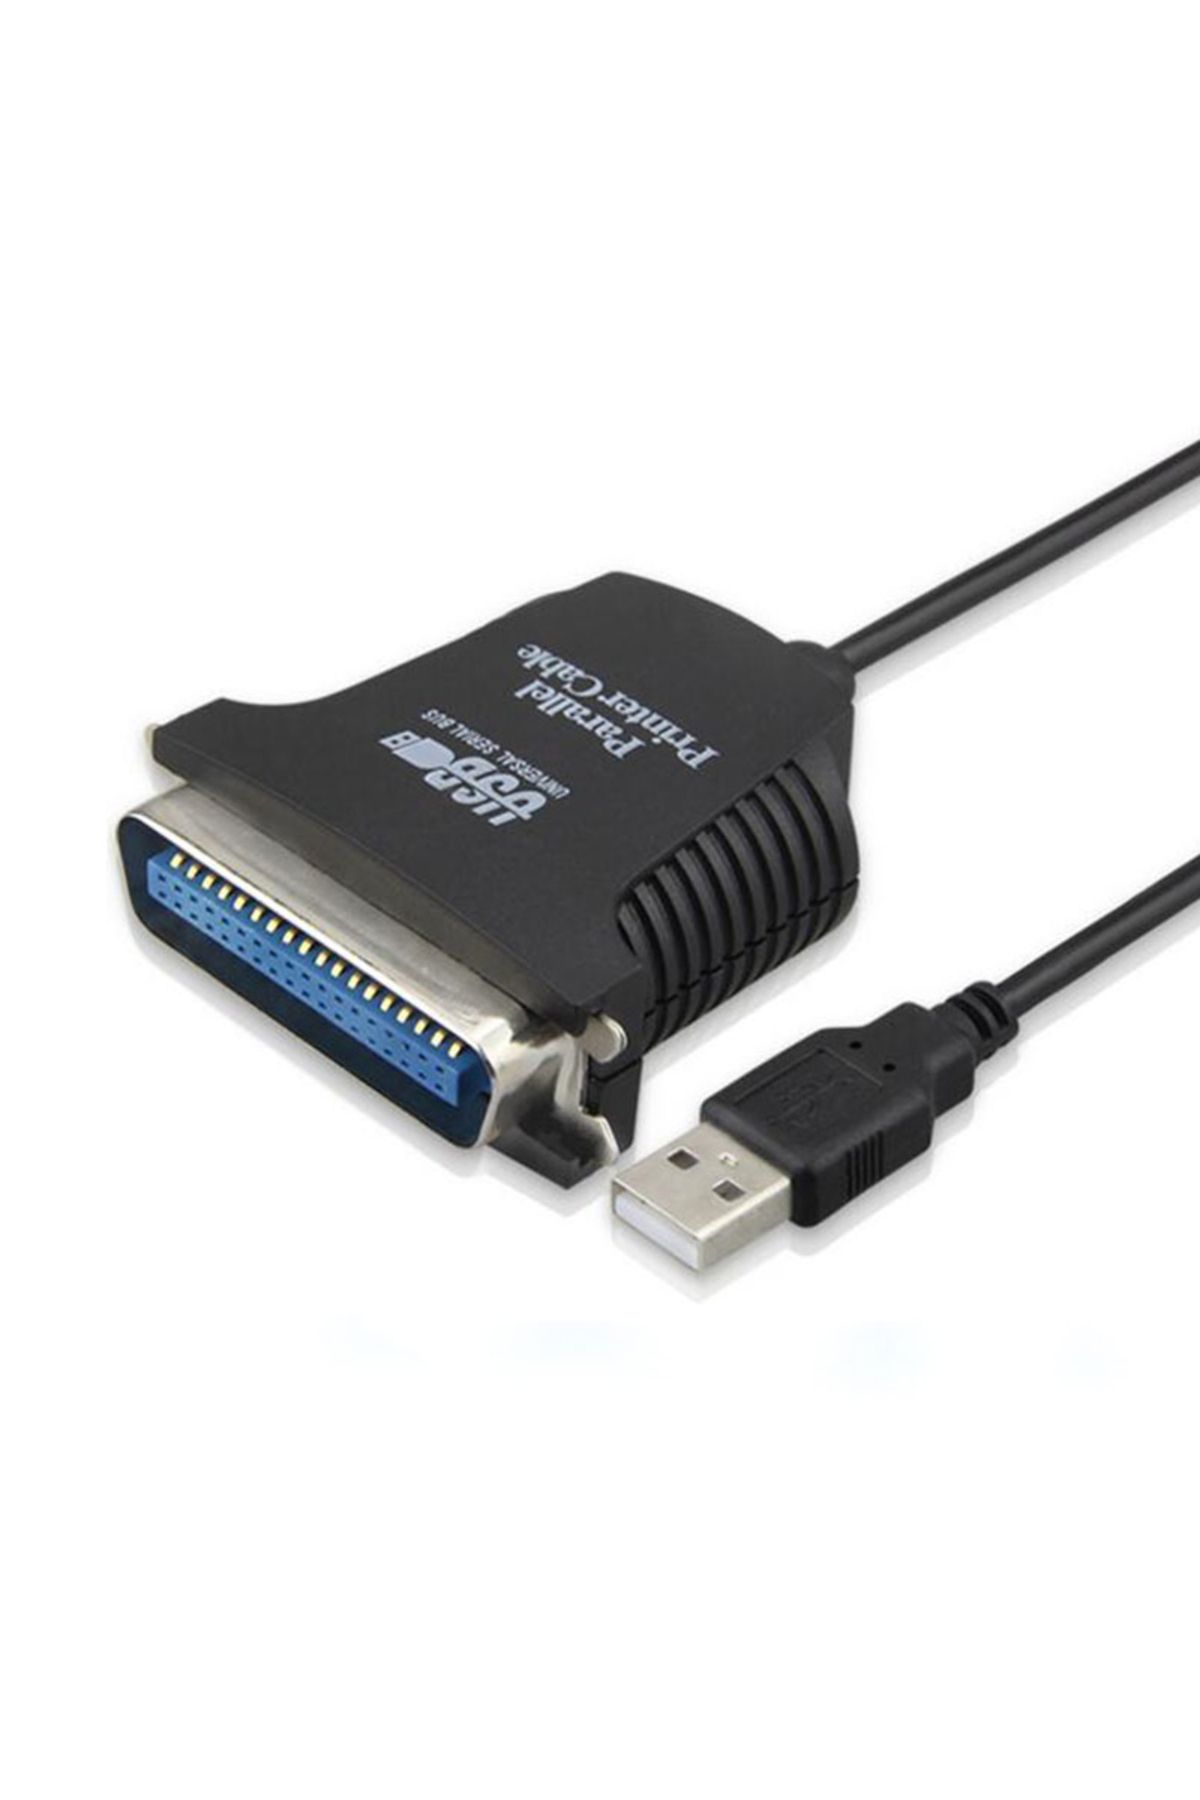 Go İthalat Usb 2.0 To 1284 Prınter Kablo 1.5 Metre (USB-LPT) (2818)